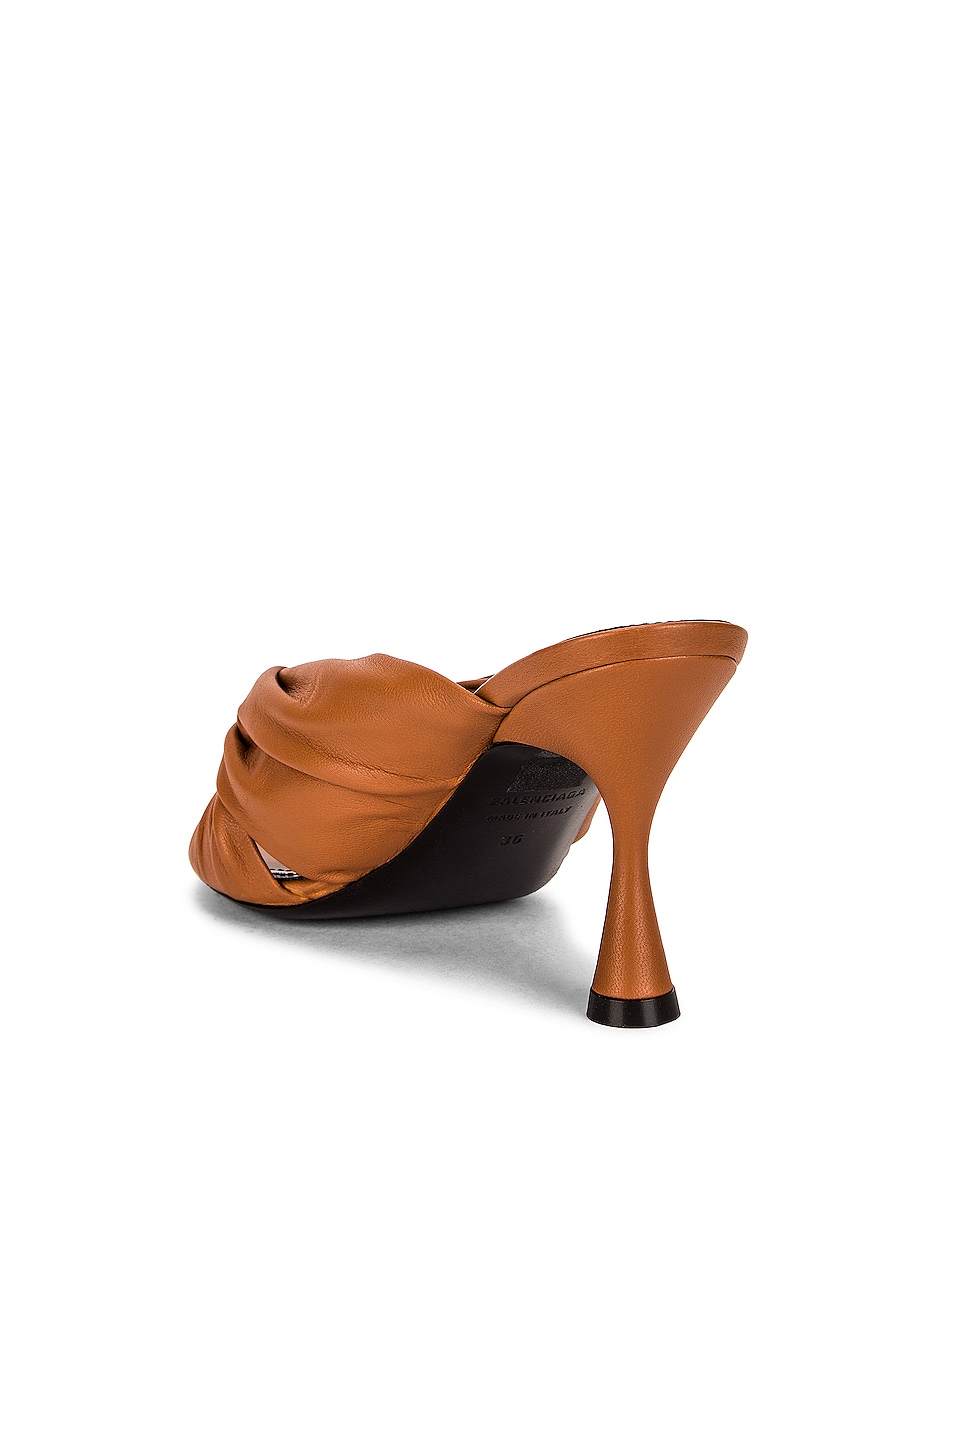 Balenciaga Drapy Sandals in Cognac | FWRD